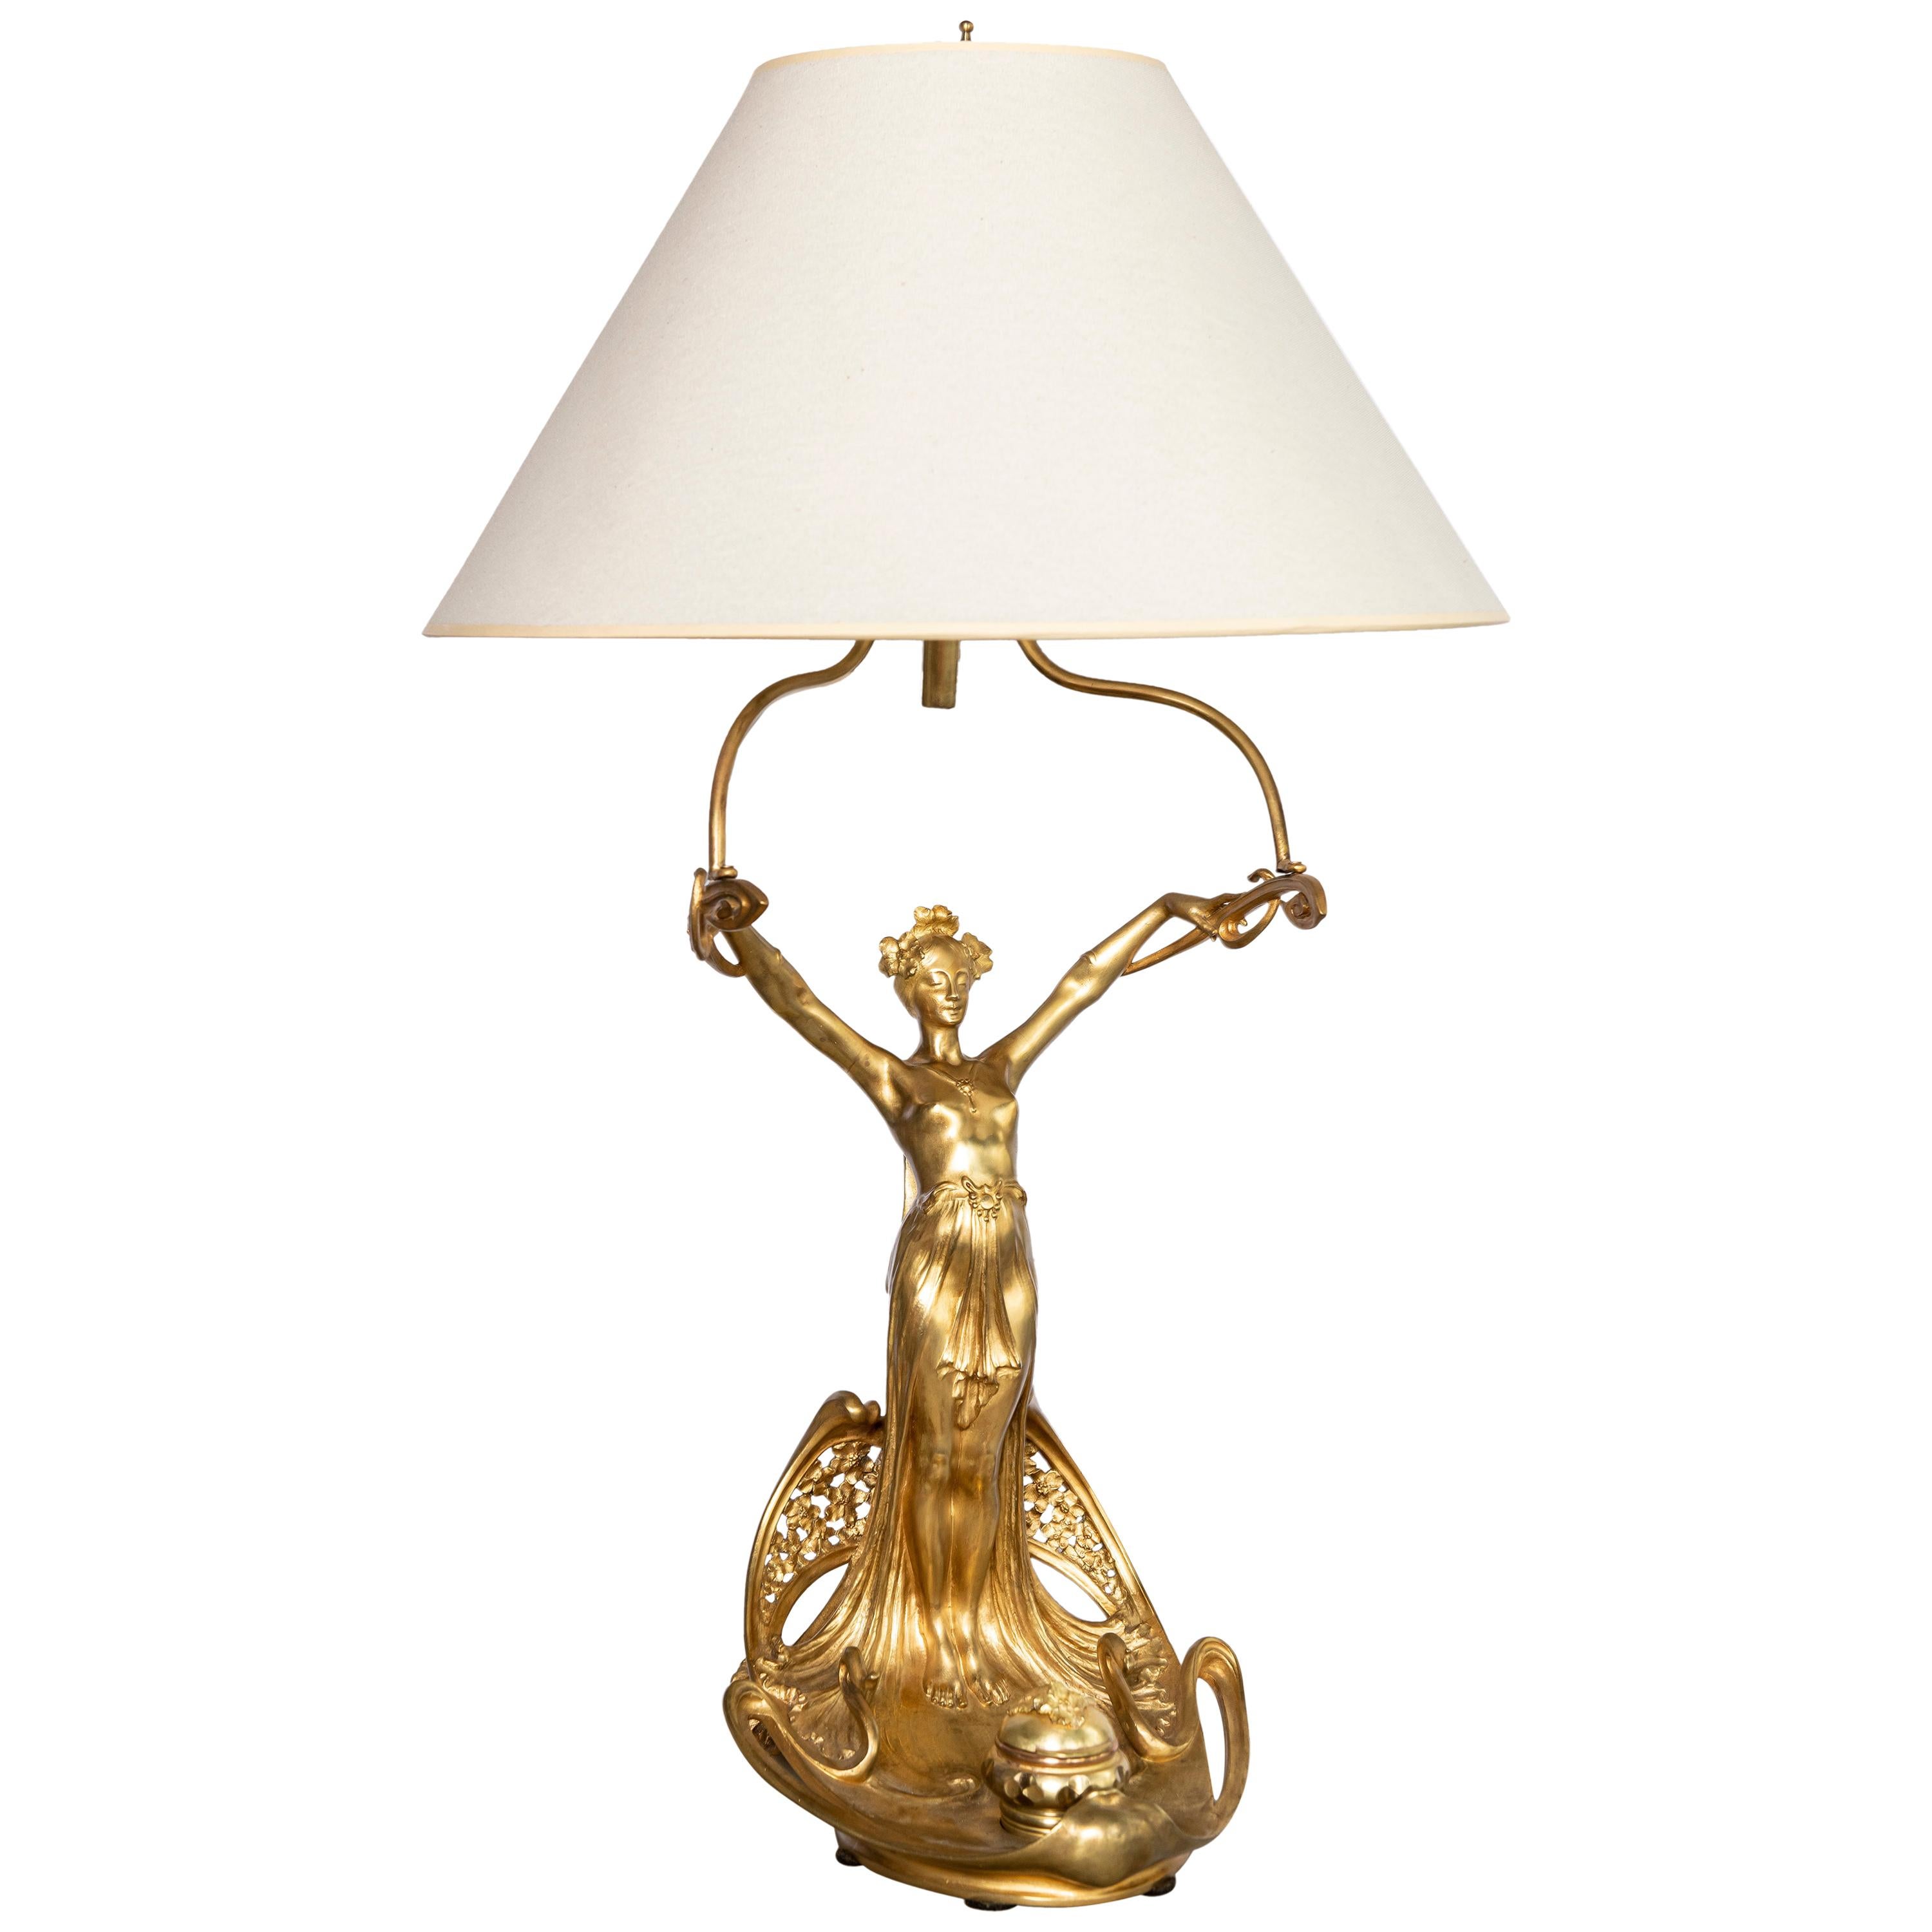 Gilt Bronze Inkwell Lamp Signed A. Féry, Art Nouveau Period. France, circa 1890